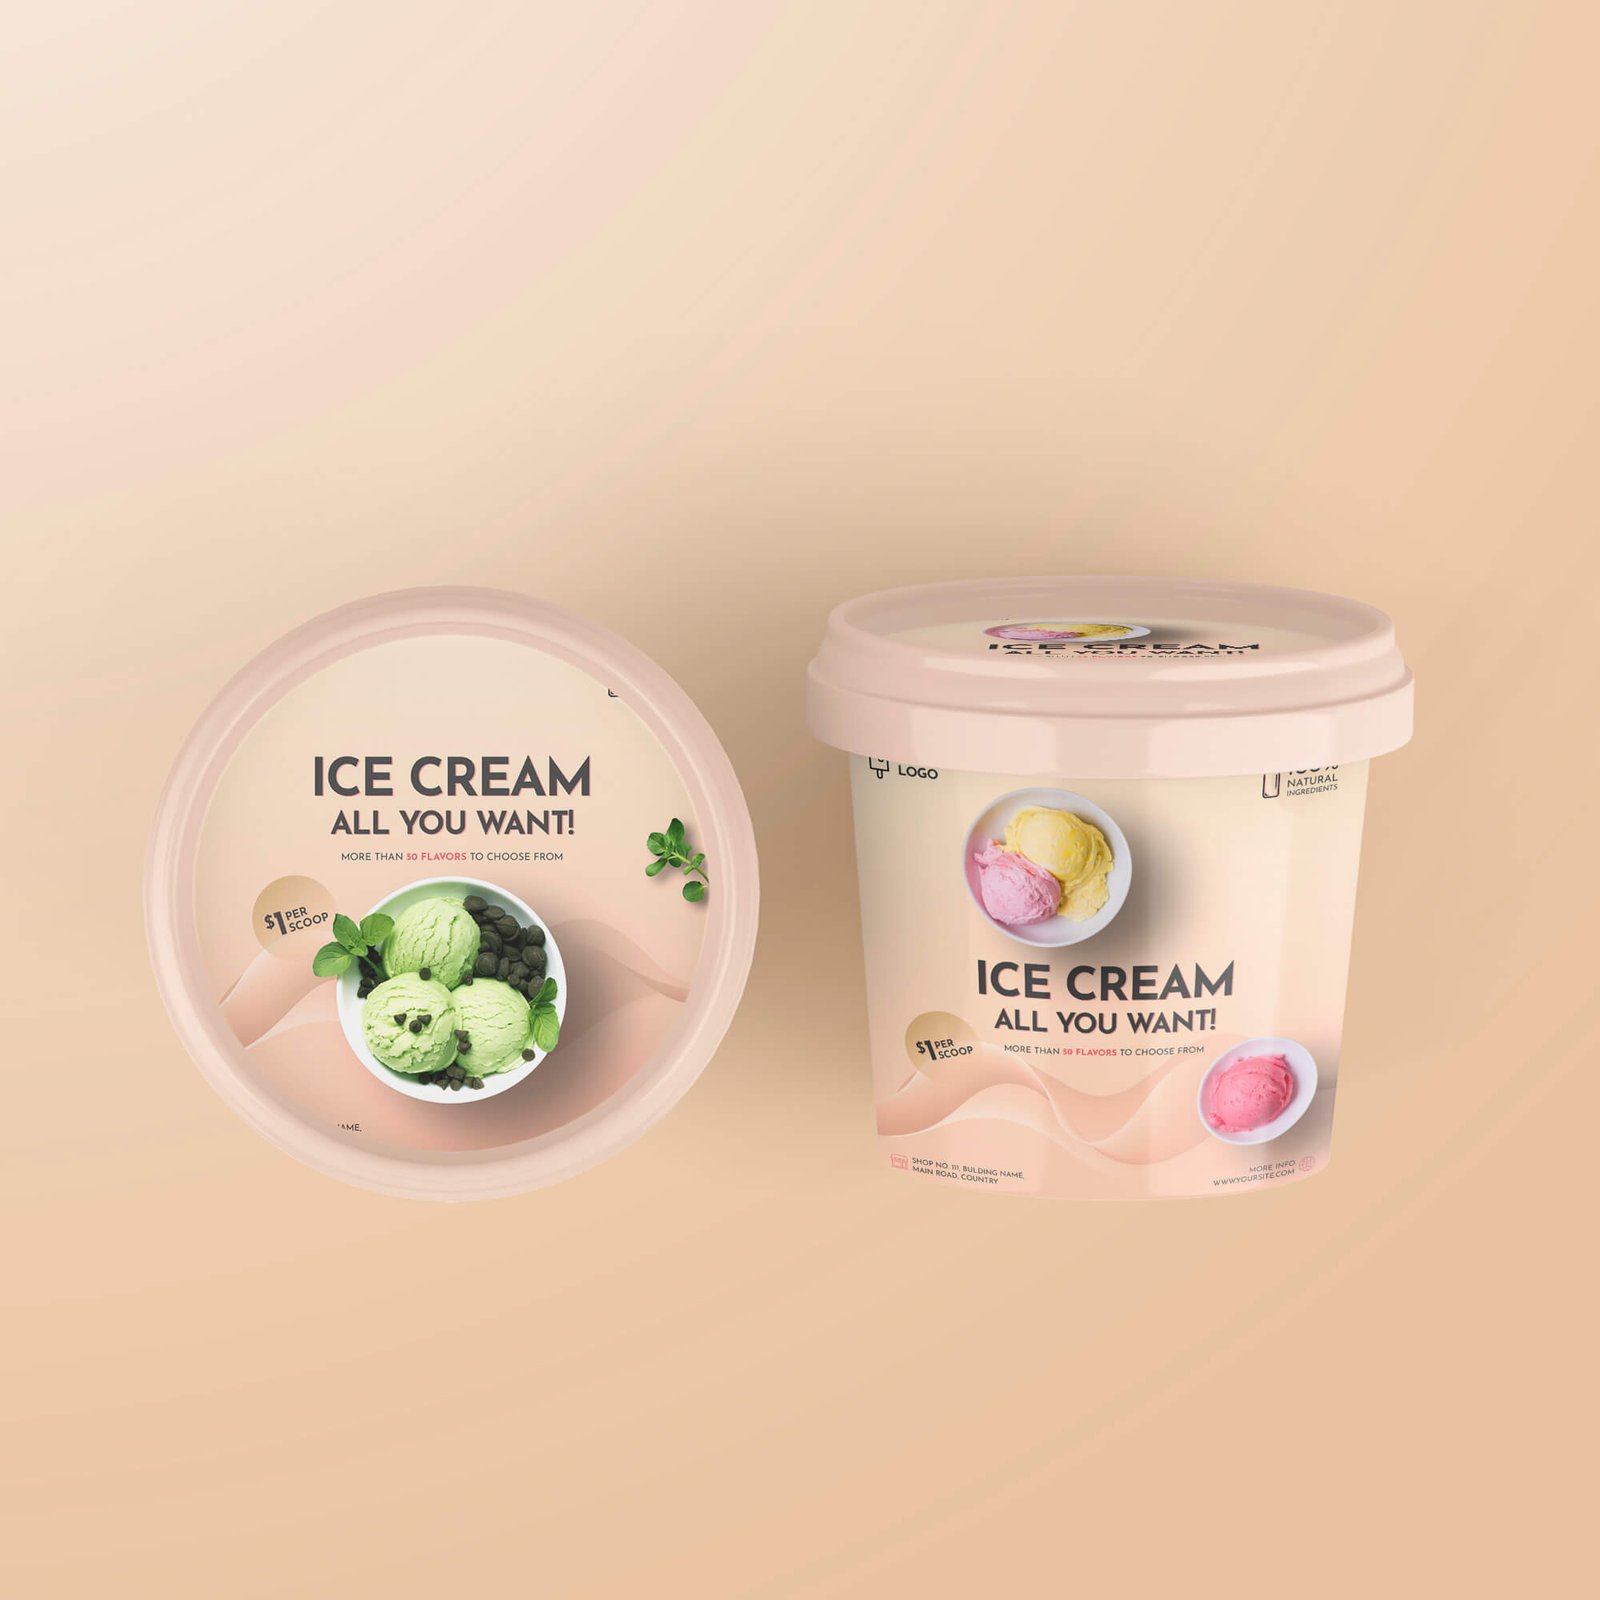 Design Free Ice Cream Cup Mockup PSD Template